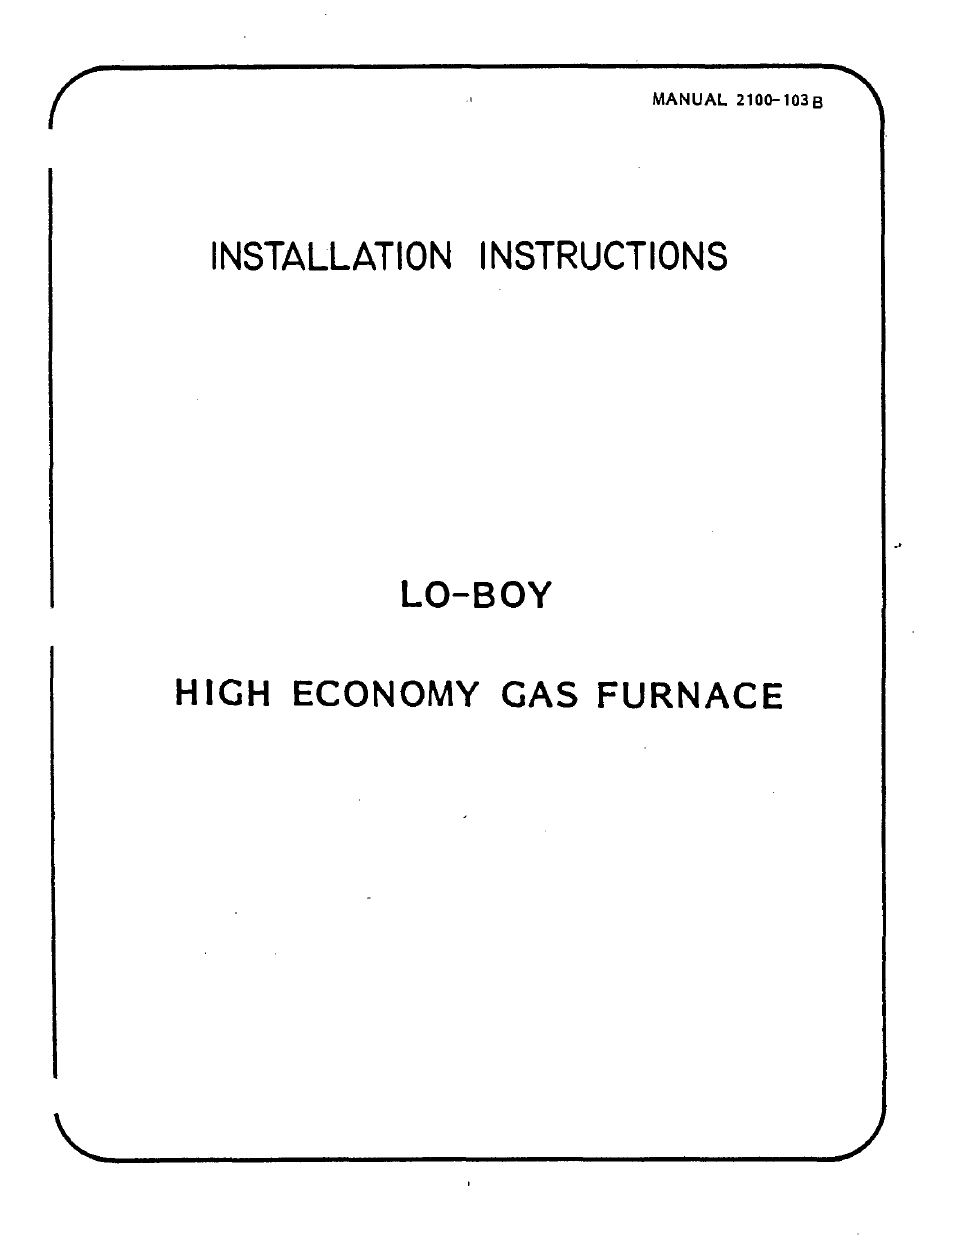 HIGH ECONOMY GAS FURNACE 1200-103B